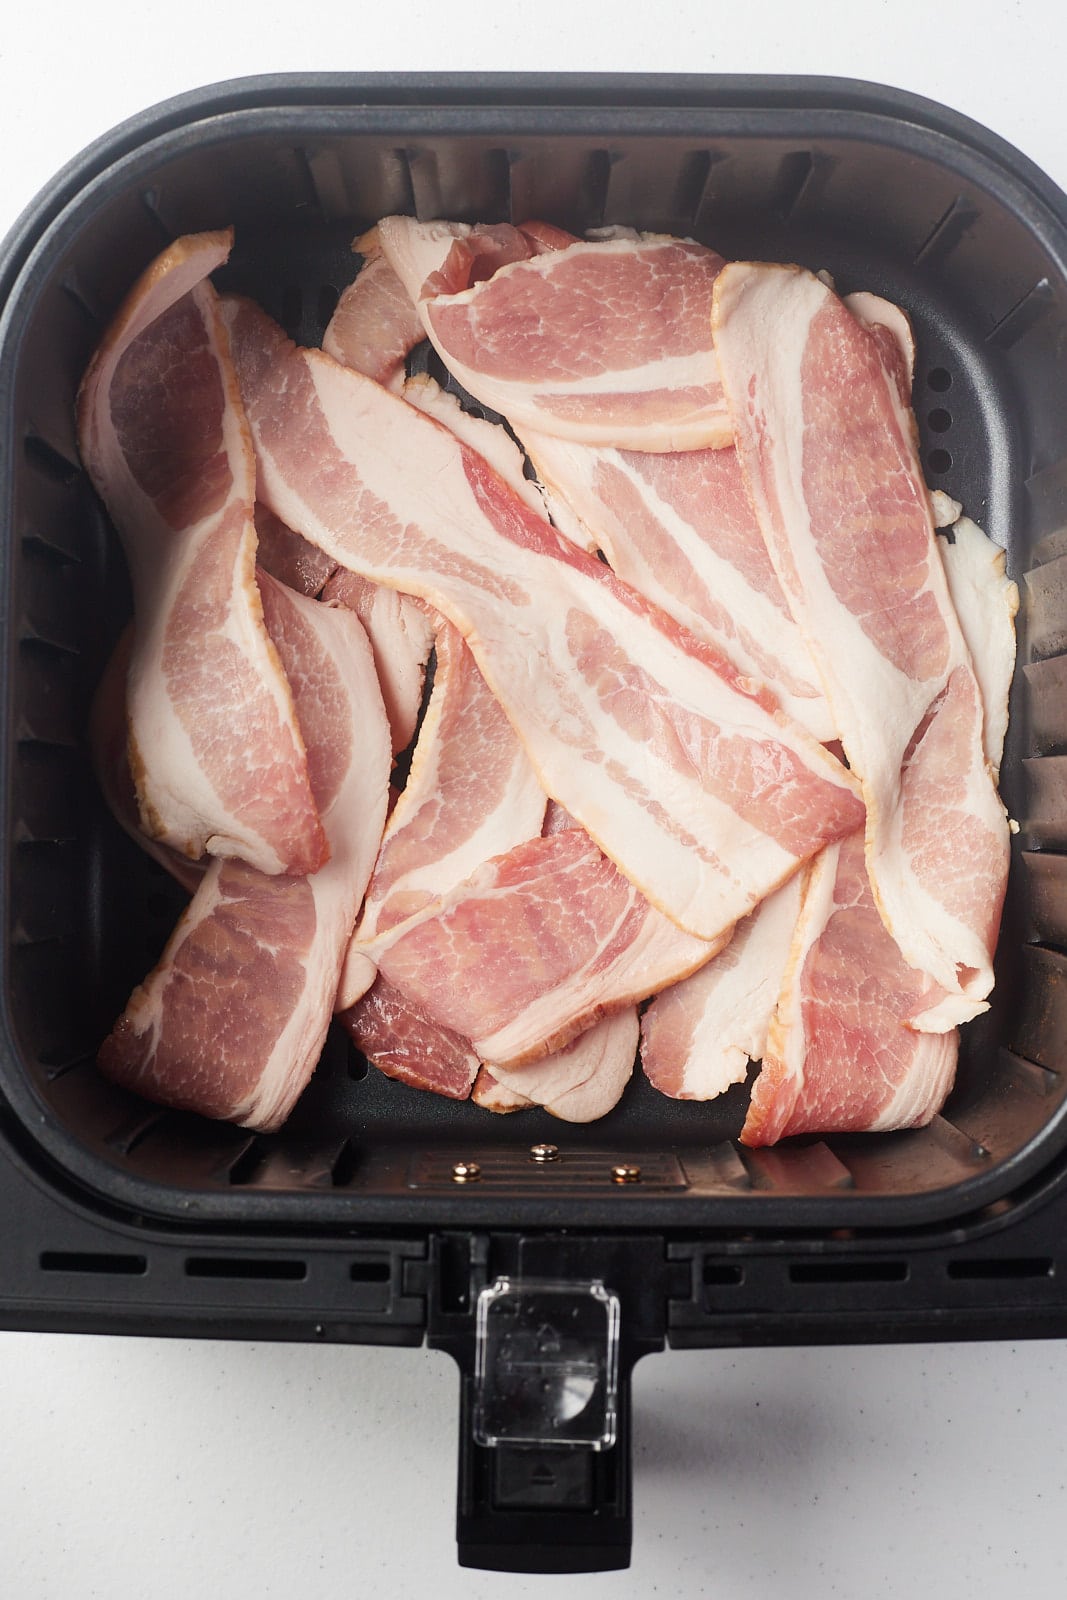 Raw bacon strips in an air fryer basket.